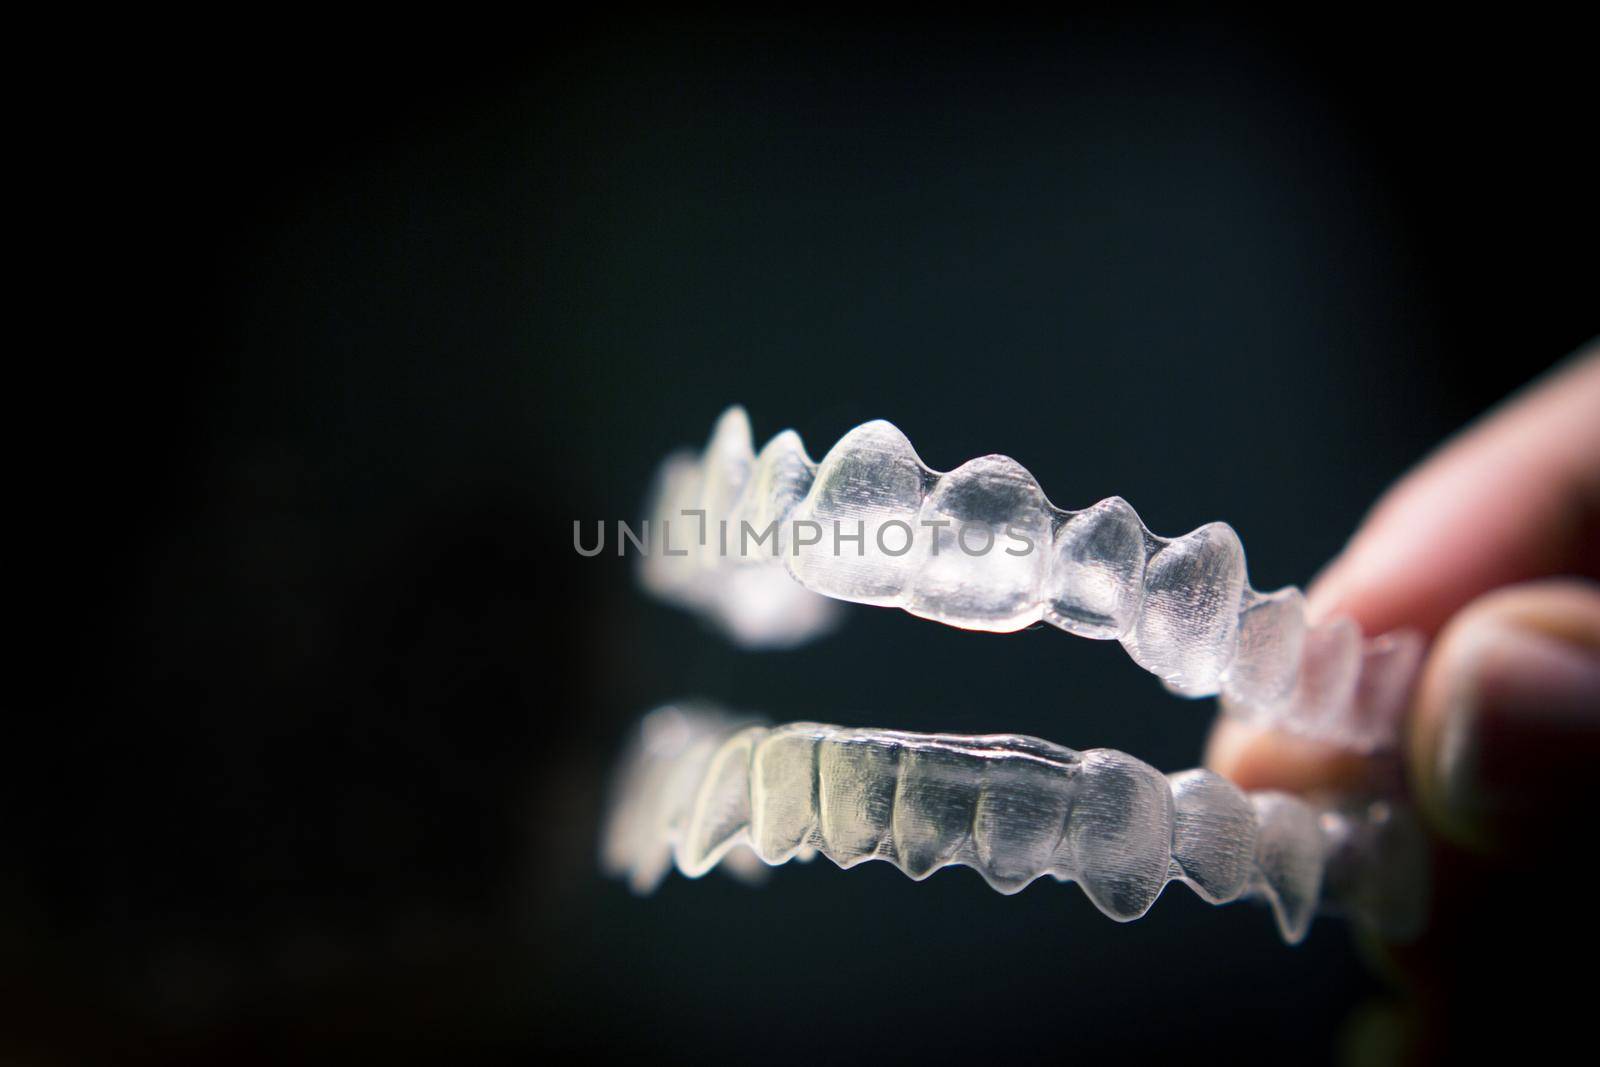 Transparent ferule retainer teeth alignment by GemaIbarra